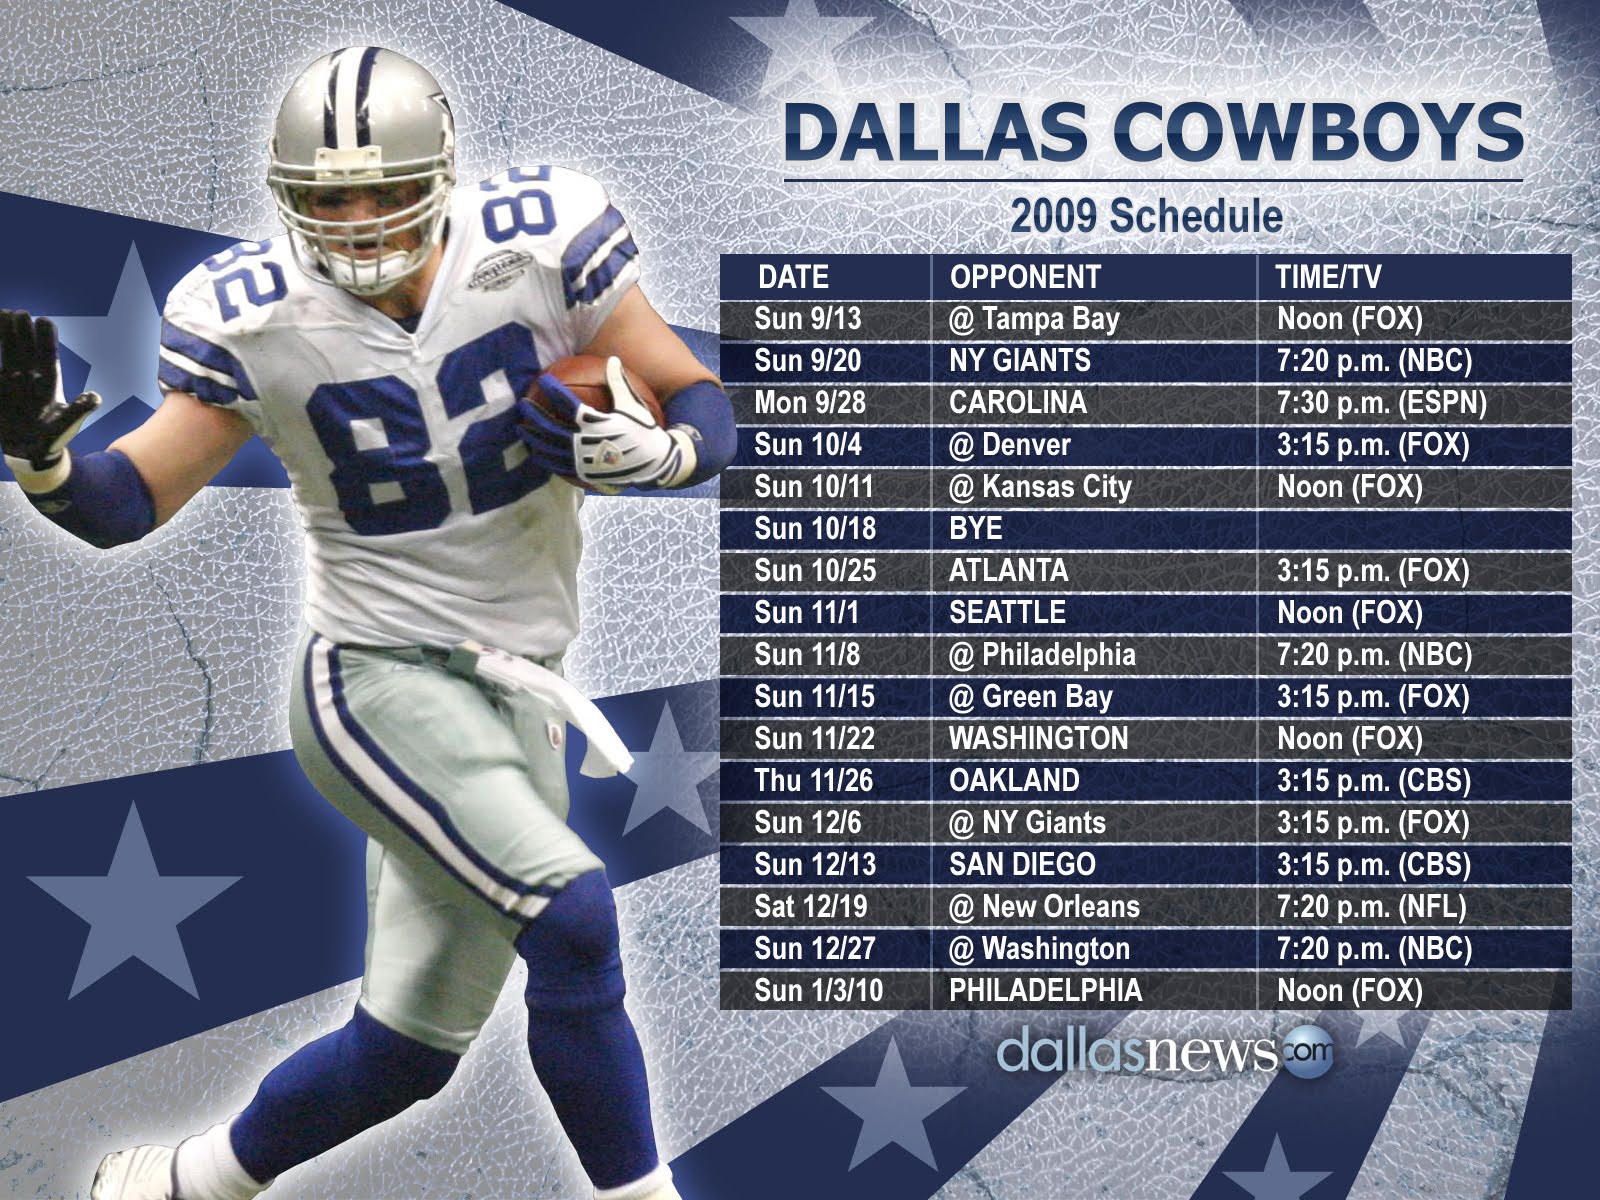 Dallas Cowboys 2016 Schedule Wallpaper - WallpaperSafari